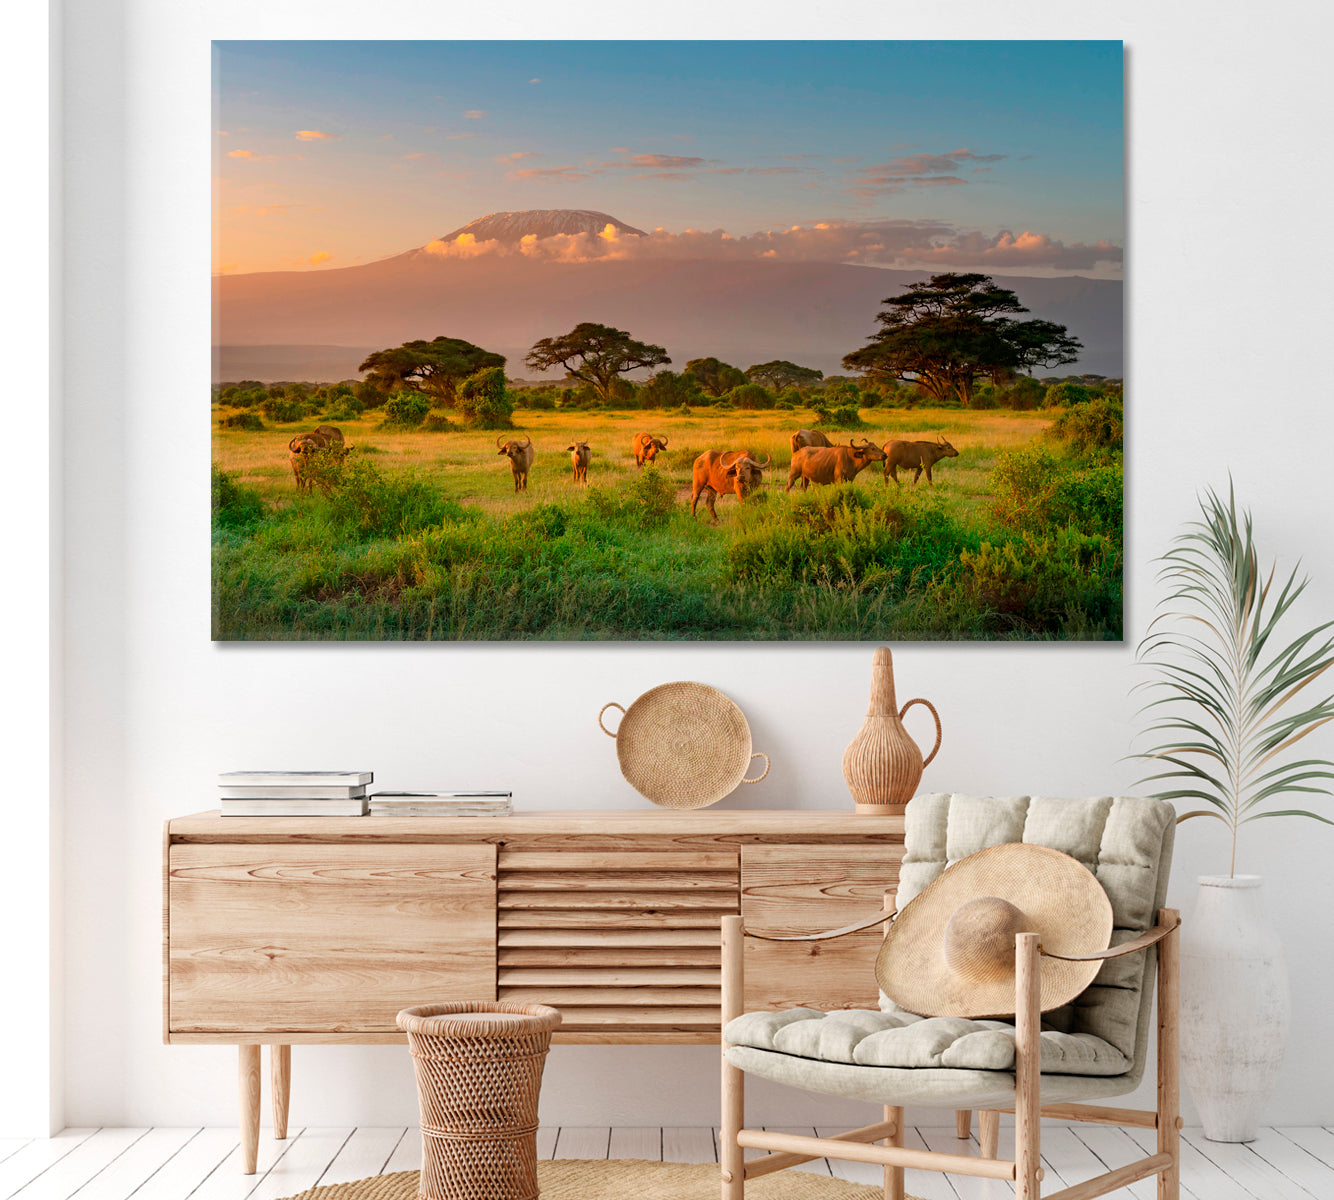 Buffalo in front of Mount Kilimanjaro Kenya Canvas Print ArtLexy 1 Panel 24"x16" inches 